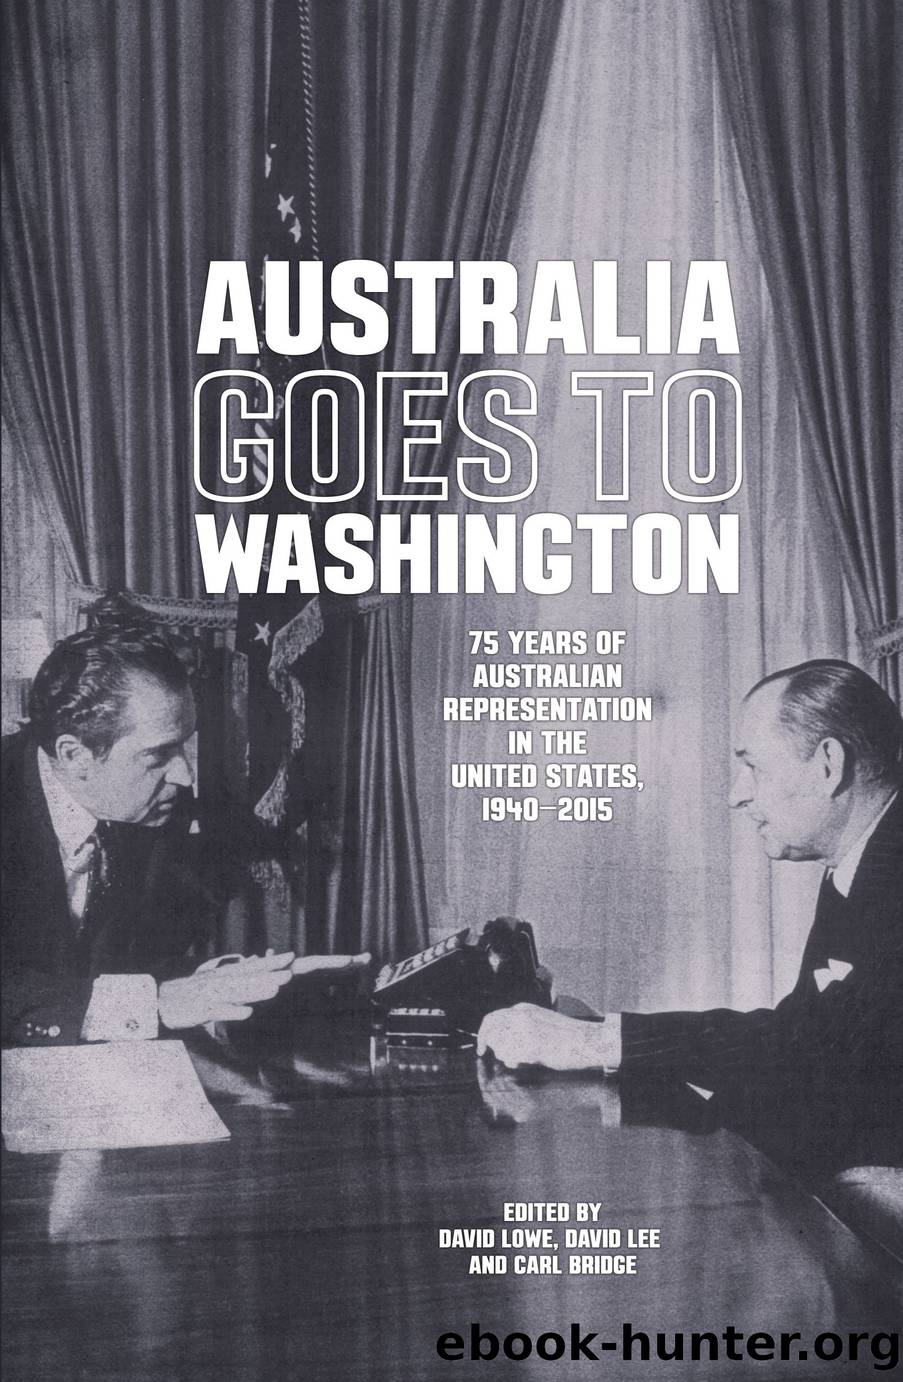 Australia goes to Washington by David Lowe;David Lee & Carl Bridge